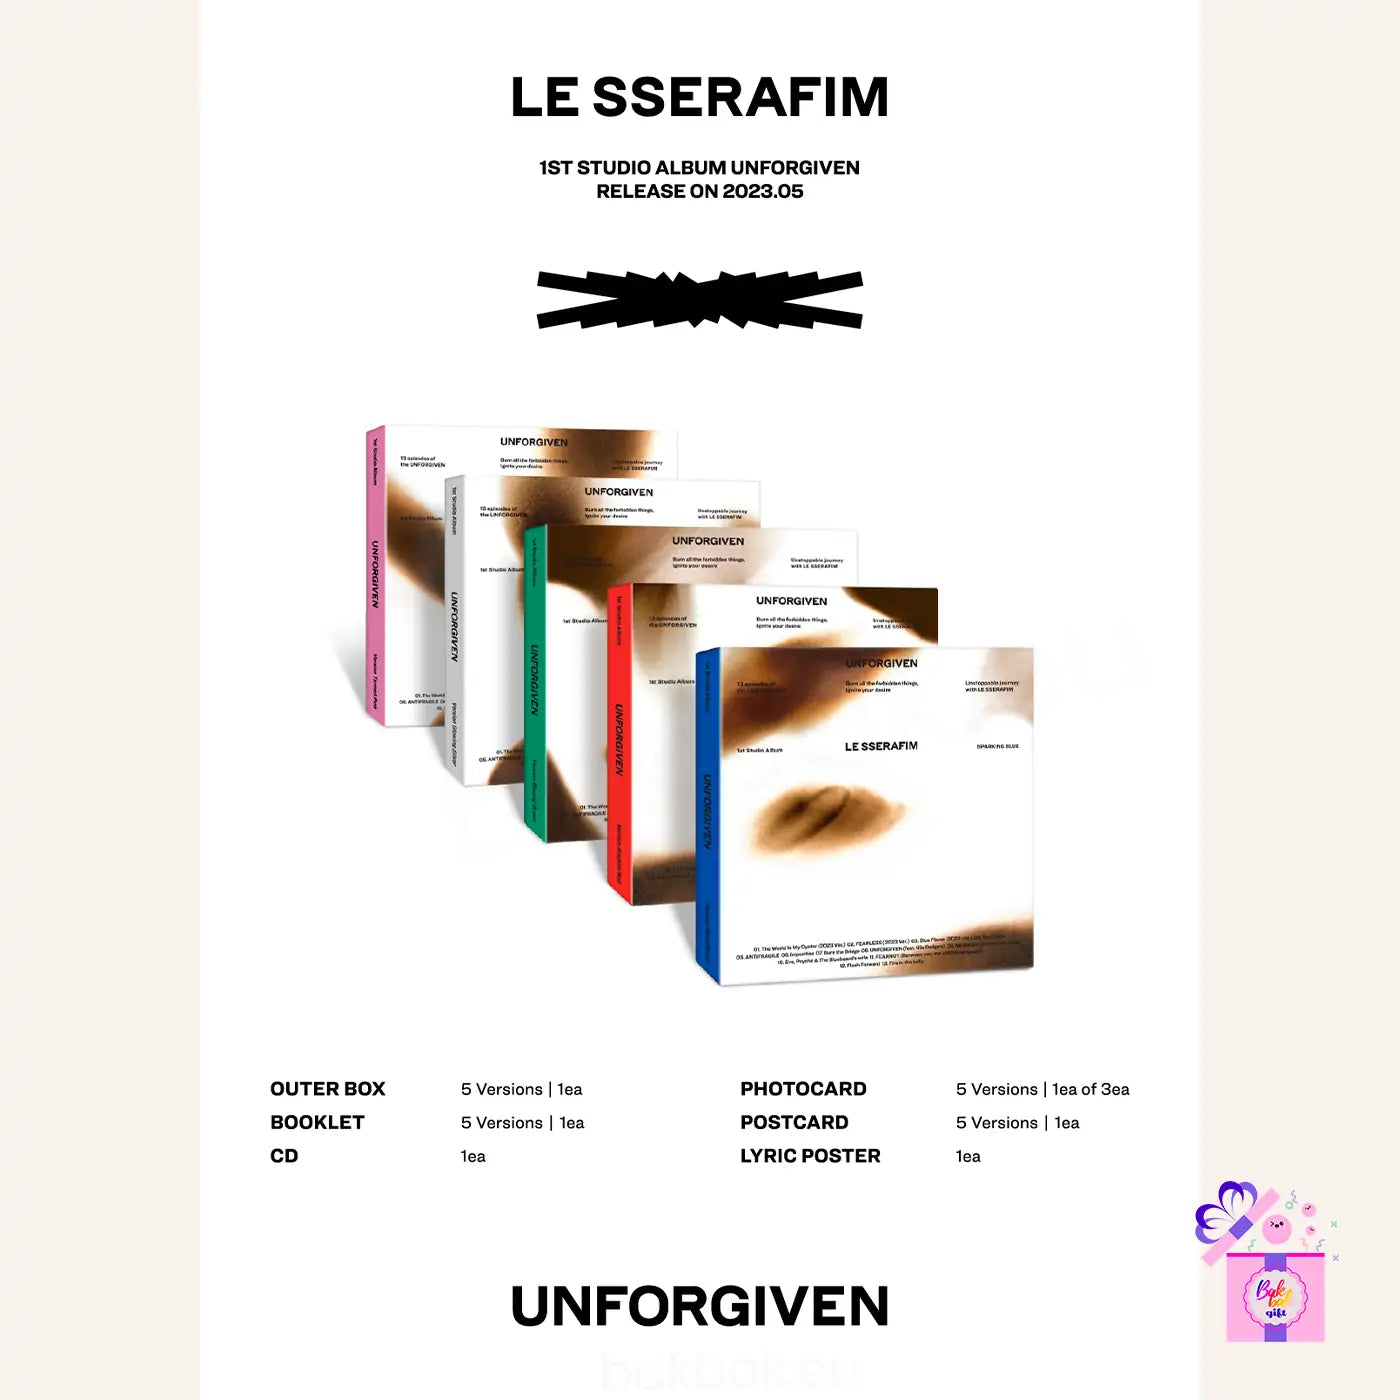 Le Sserafim - Unforgiven (Compact Version)